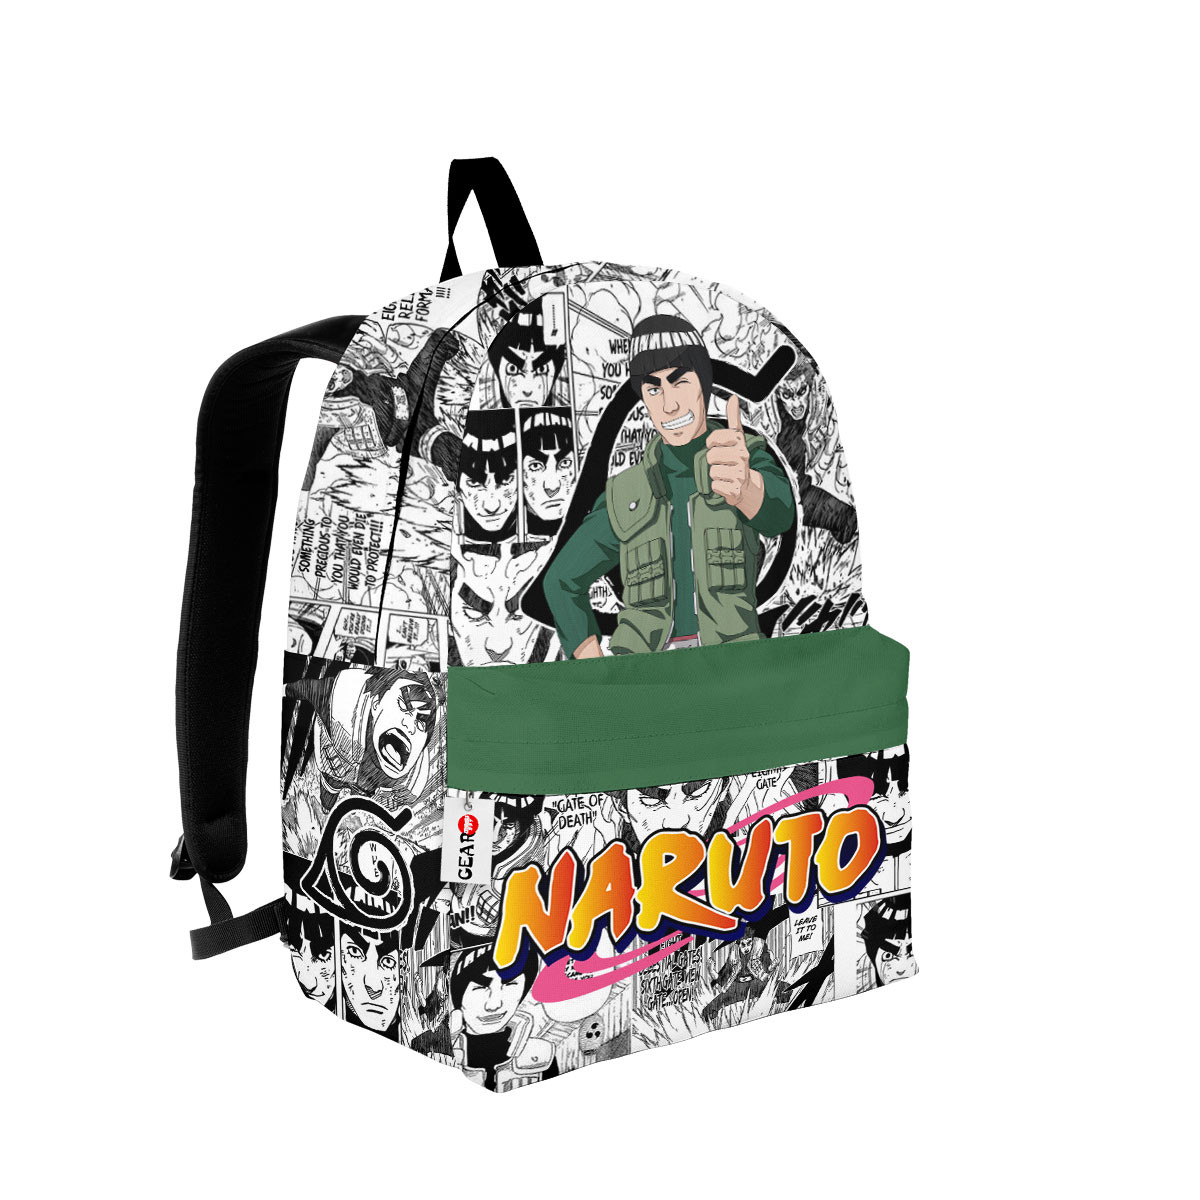 BEST Guy Might NRT Anime Manga Style Backpack Bag2